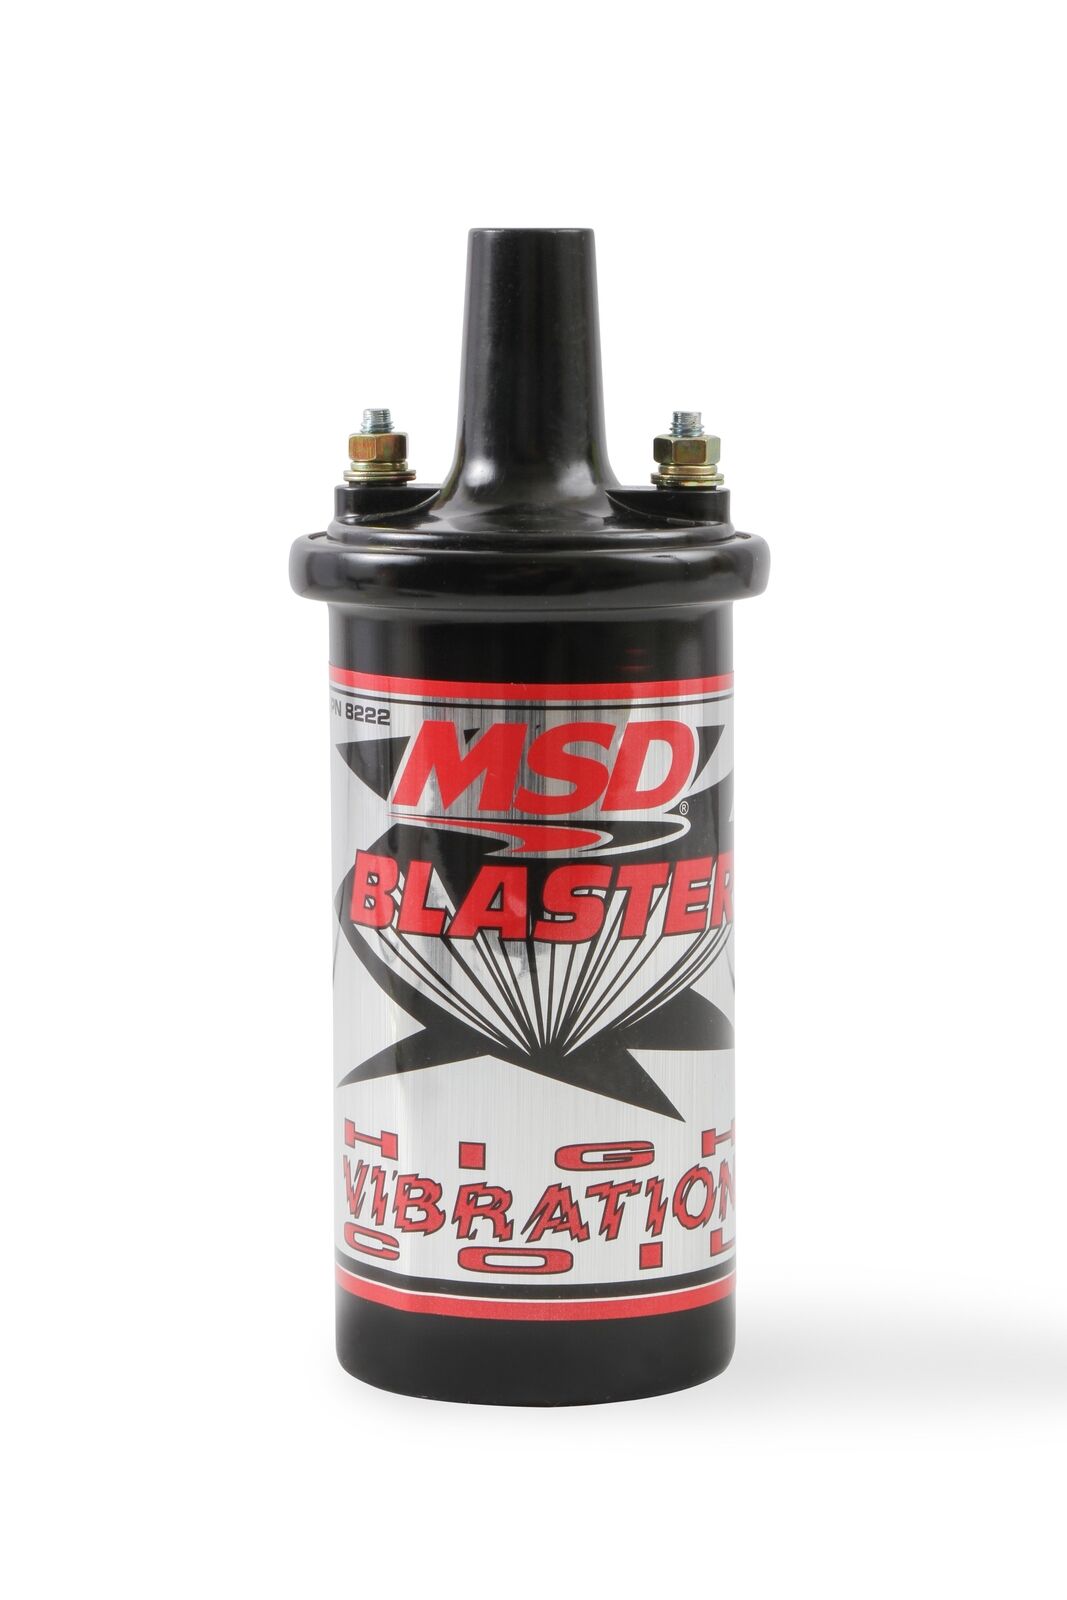 8222 MSD Ignition Coil - Blaster Series - High Vibration - Black